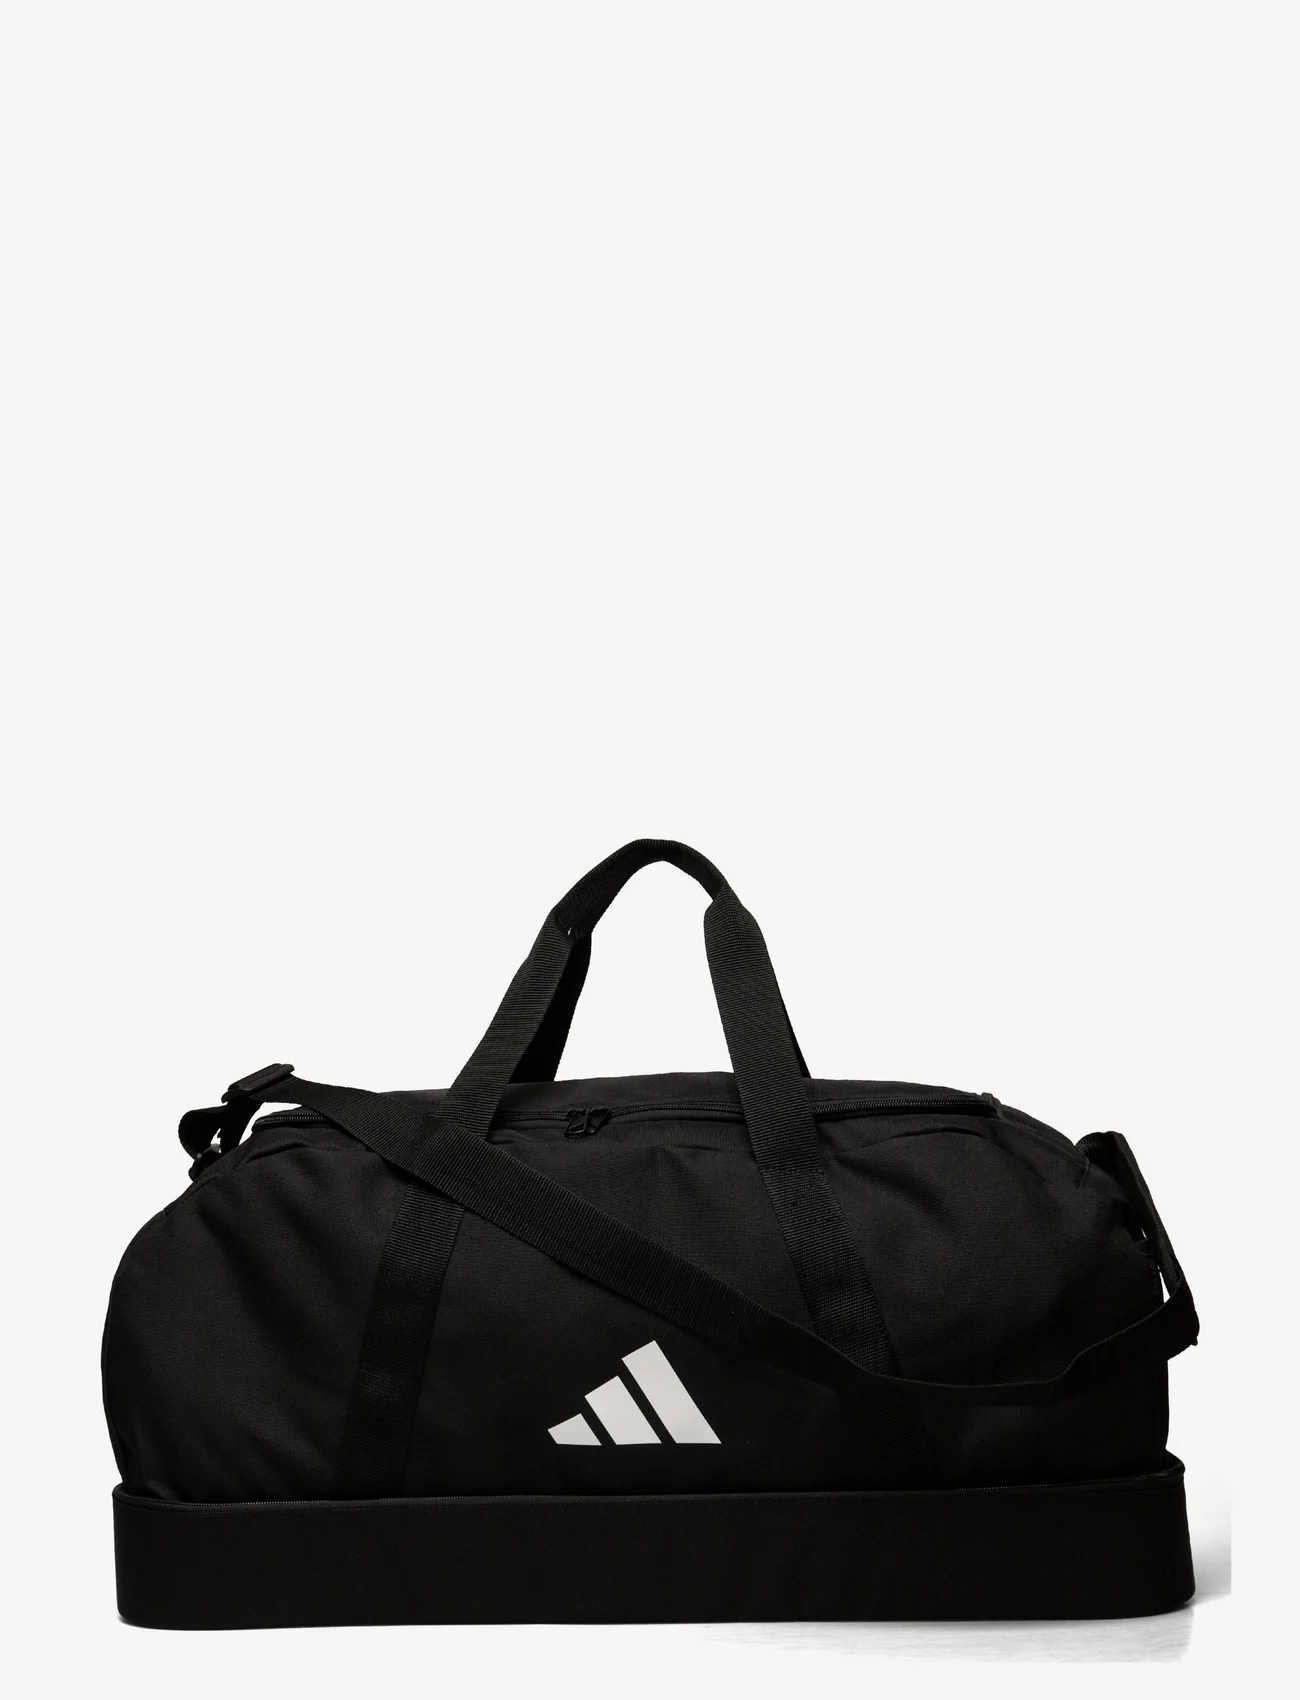 adidas Performance - TIRO LEAGUE DUFFLE BAG LARGE WITH BOTTOM COMPARTMENT - men - black/white - 0